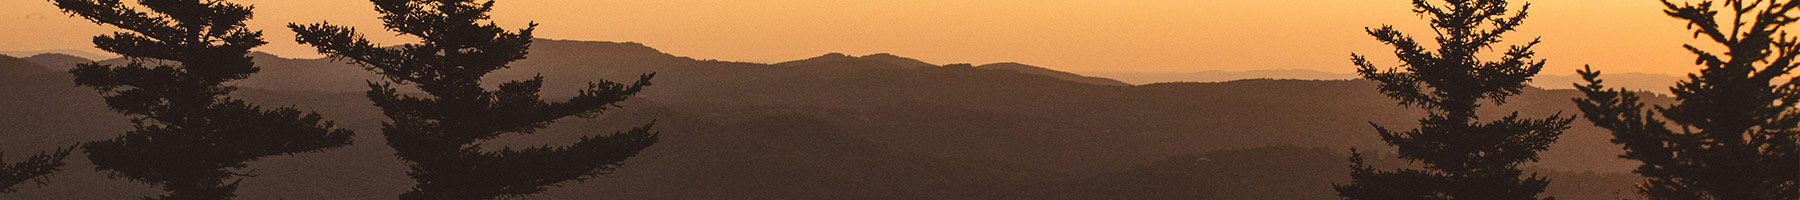 sunrise over Appalachian mountains